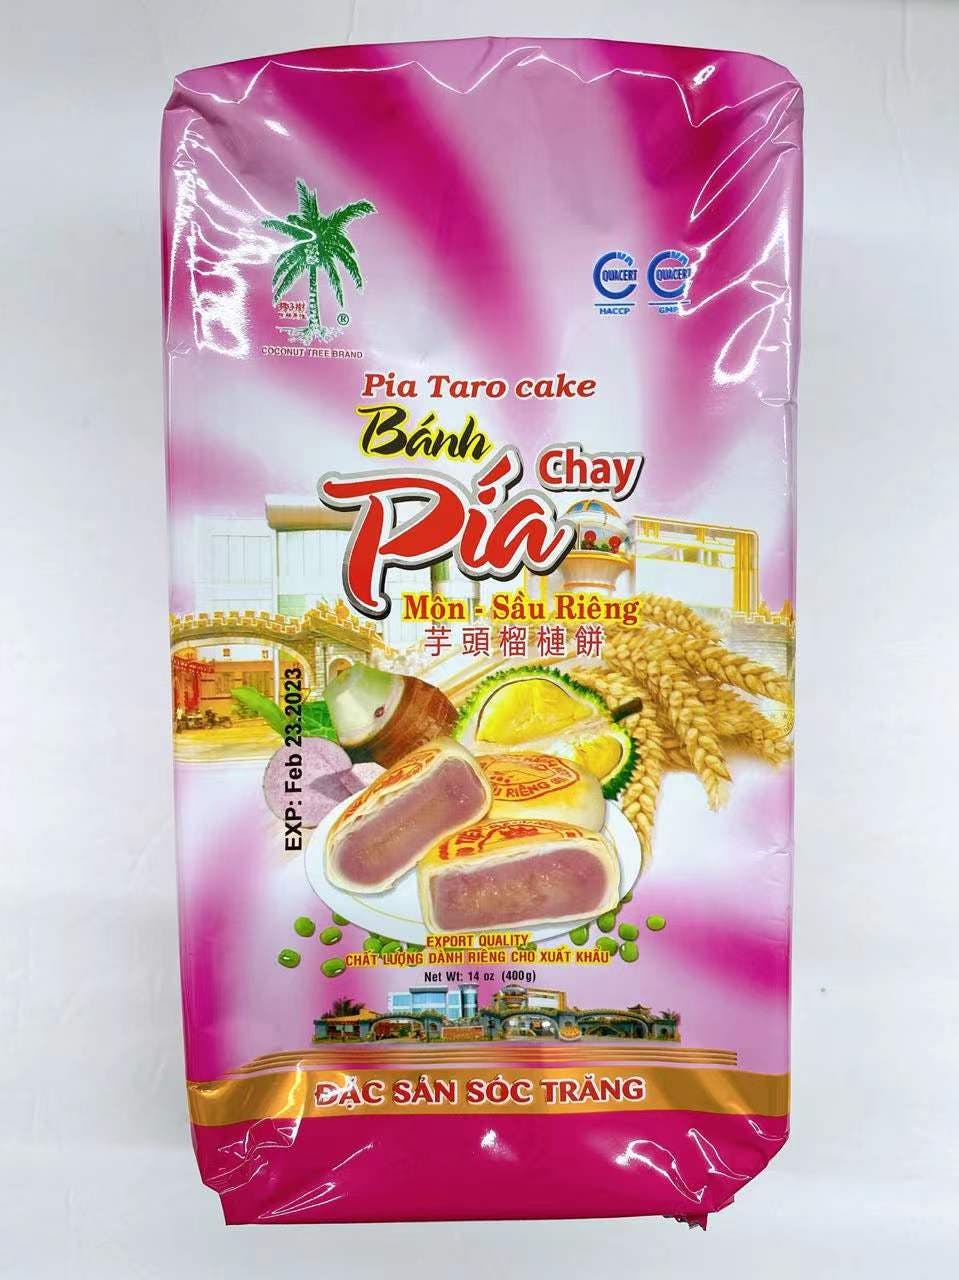 COCONUT TREE 芋头榴莲酥饼 Pia Chay Taro Durian Cake 400g